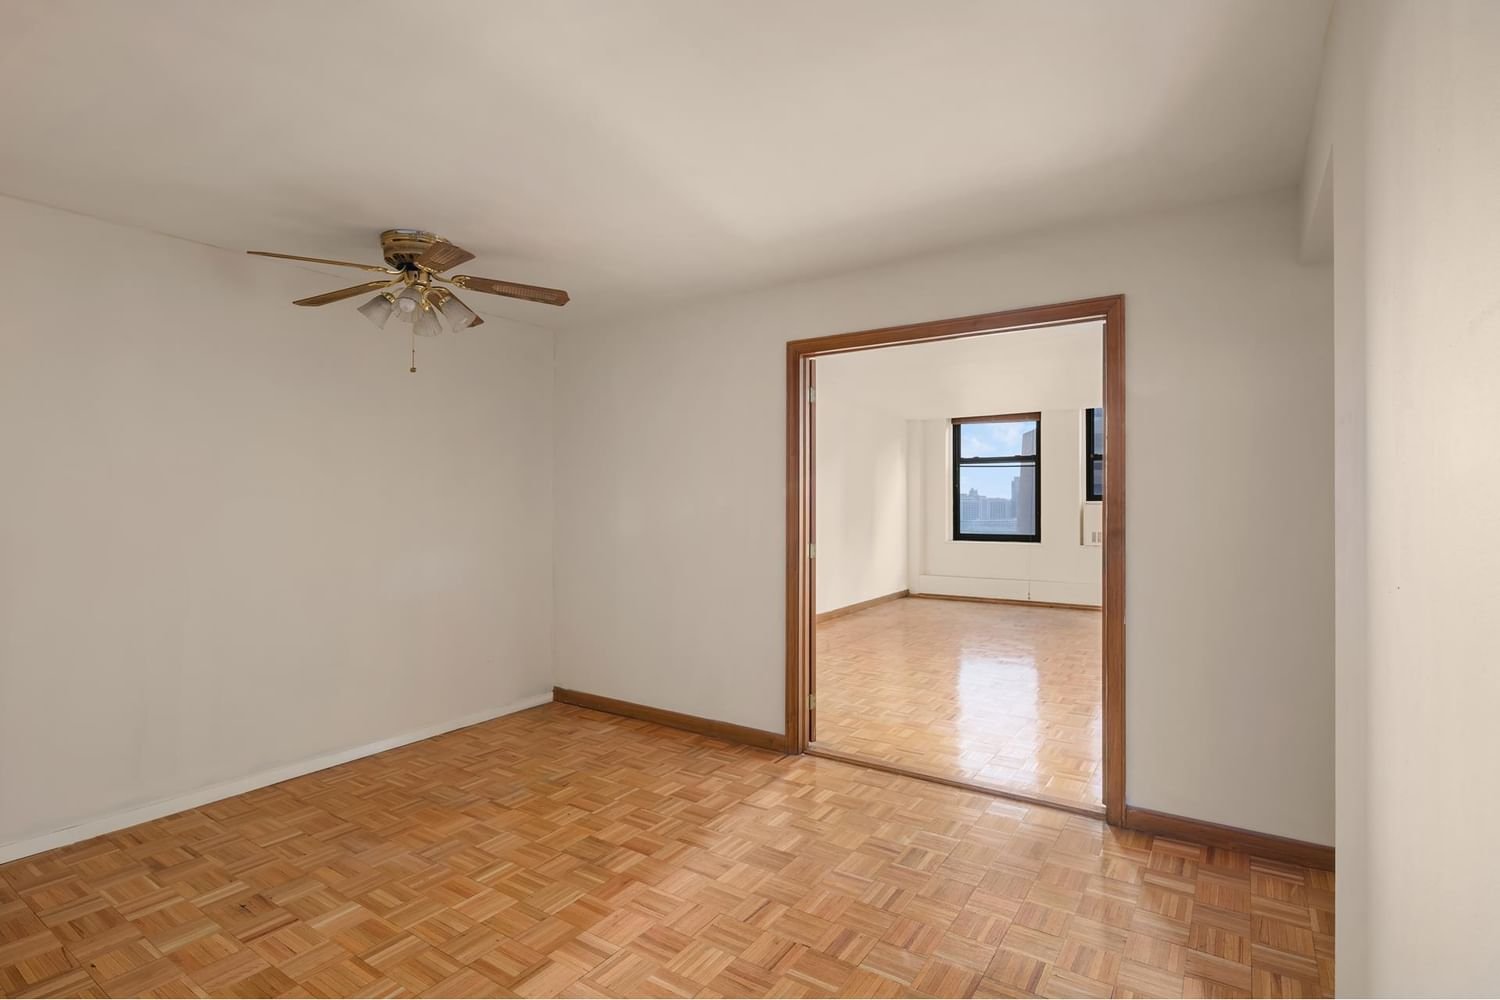 Real estate property located at 3 Hanover #12G, New York, New York City, NY